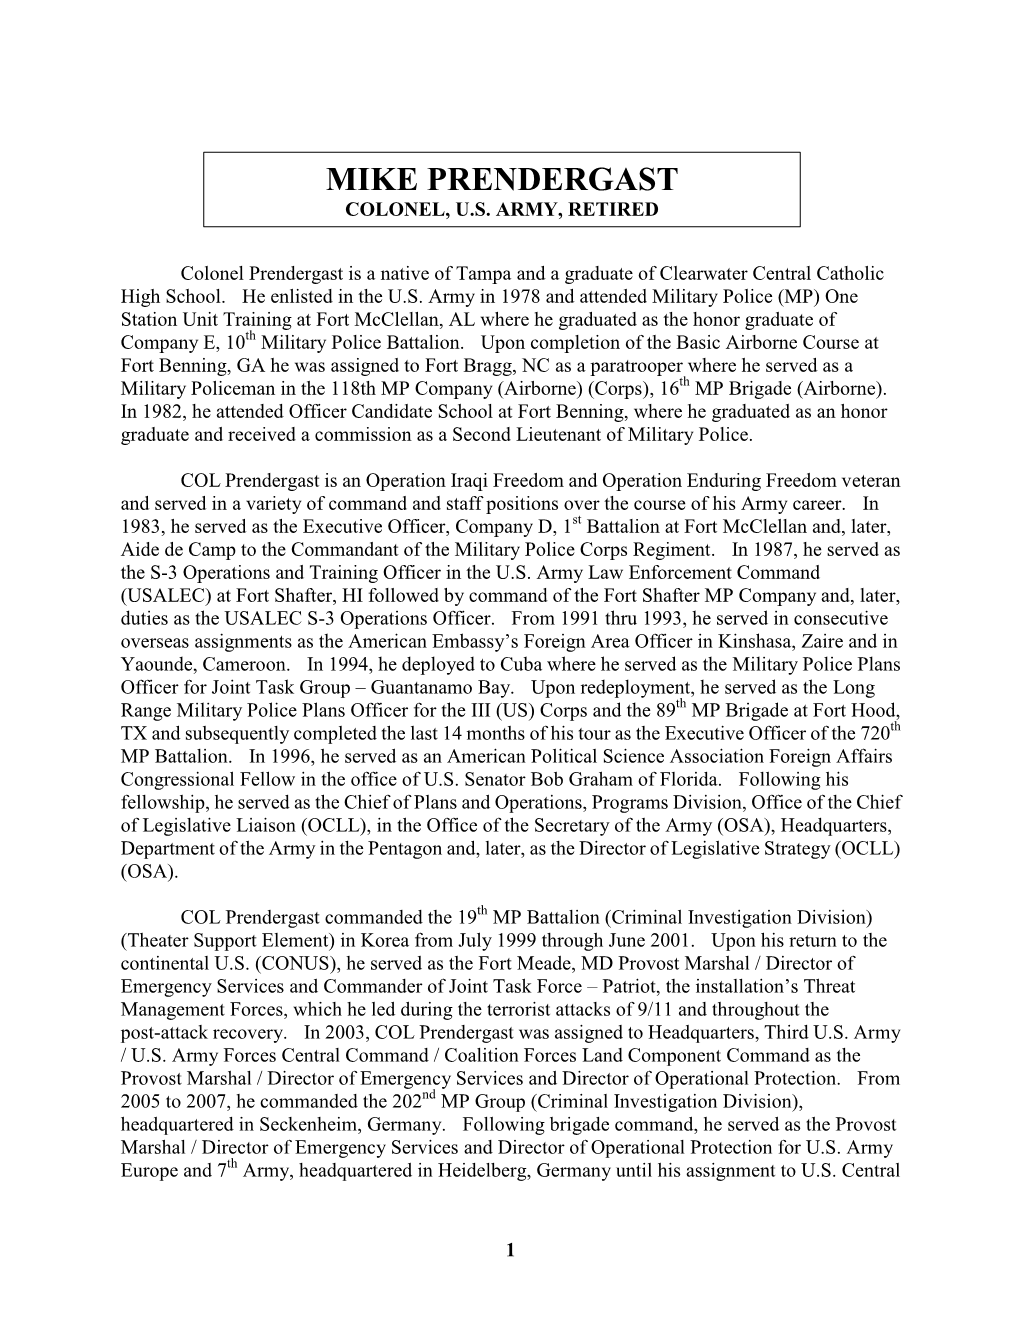 Mike Prendergast Colonel, U.S